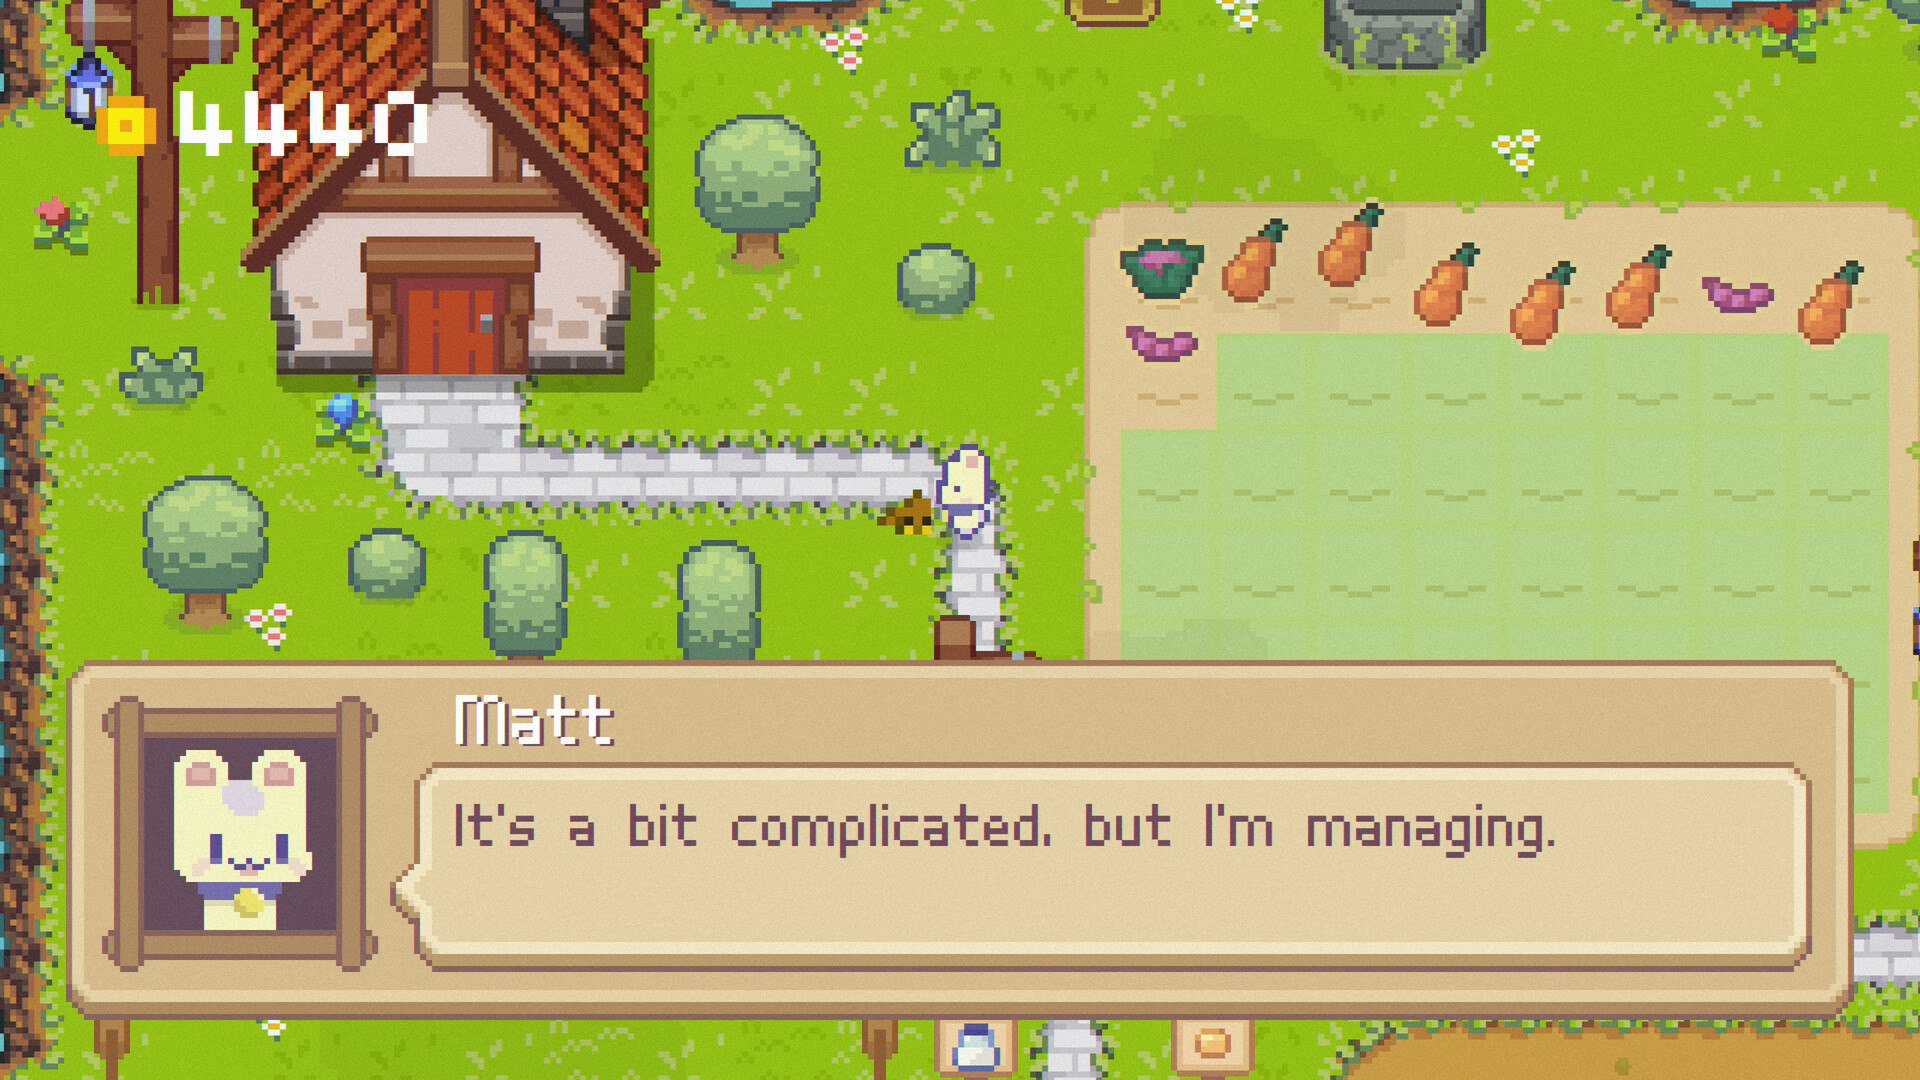 A screenshot of Matt the cat saying "it's a bit complicated, but I'm managing" from Cute Farmer Life